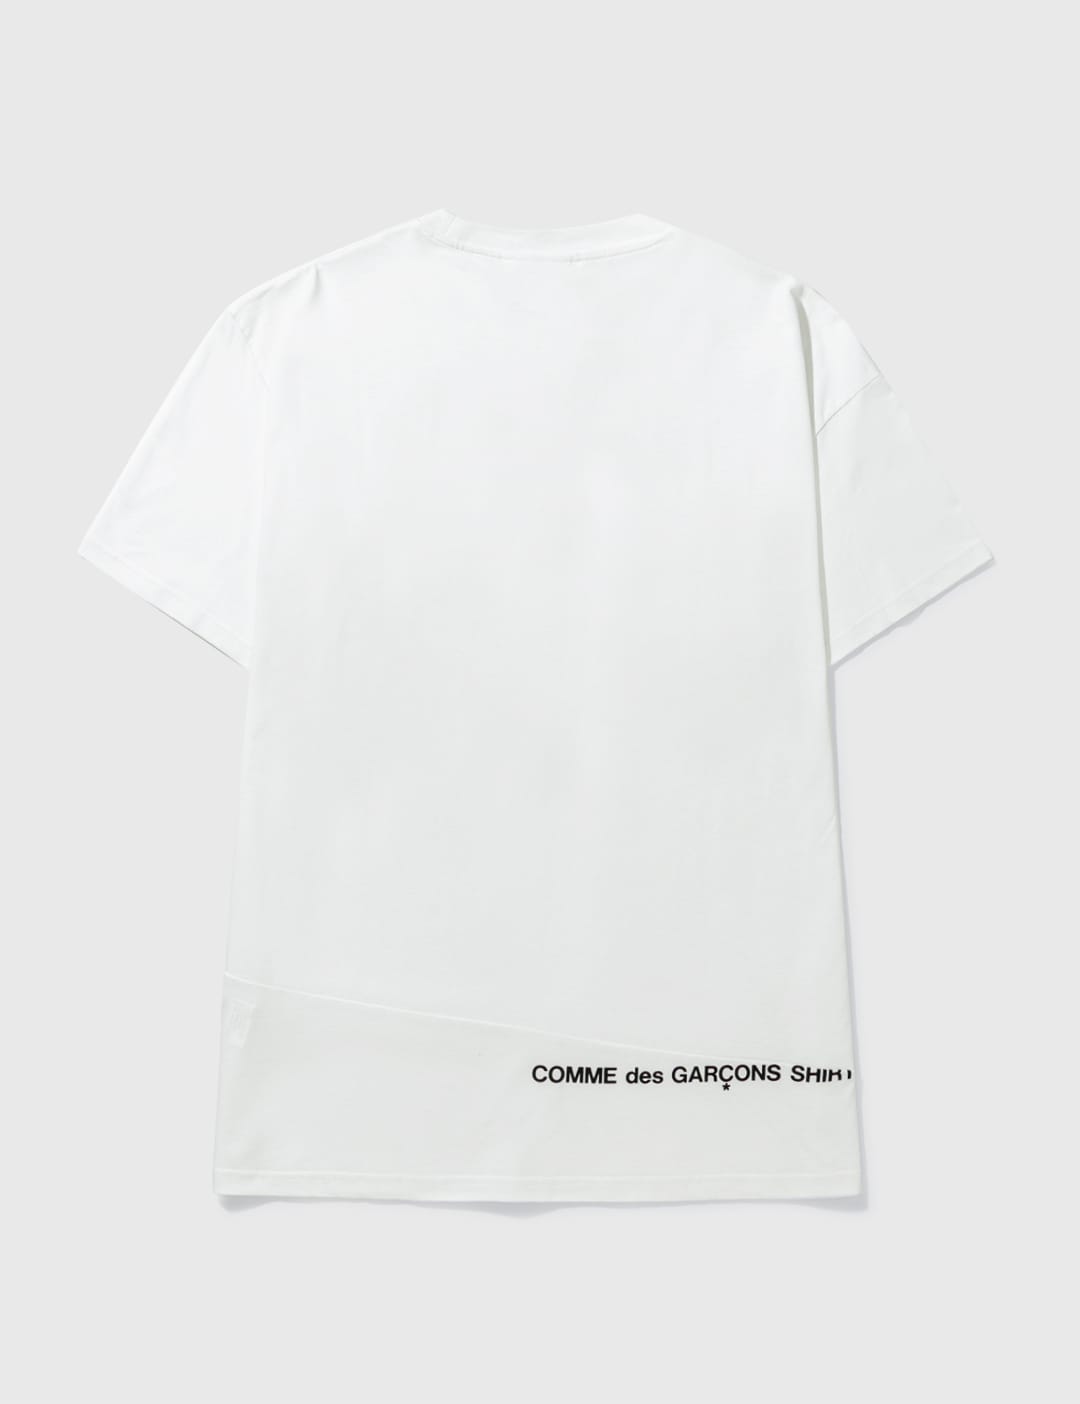 FW18 Supreme CDG Comme des Garcons split box logo tee shirt white medium used